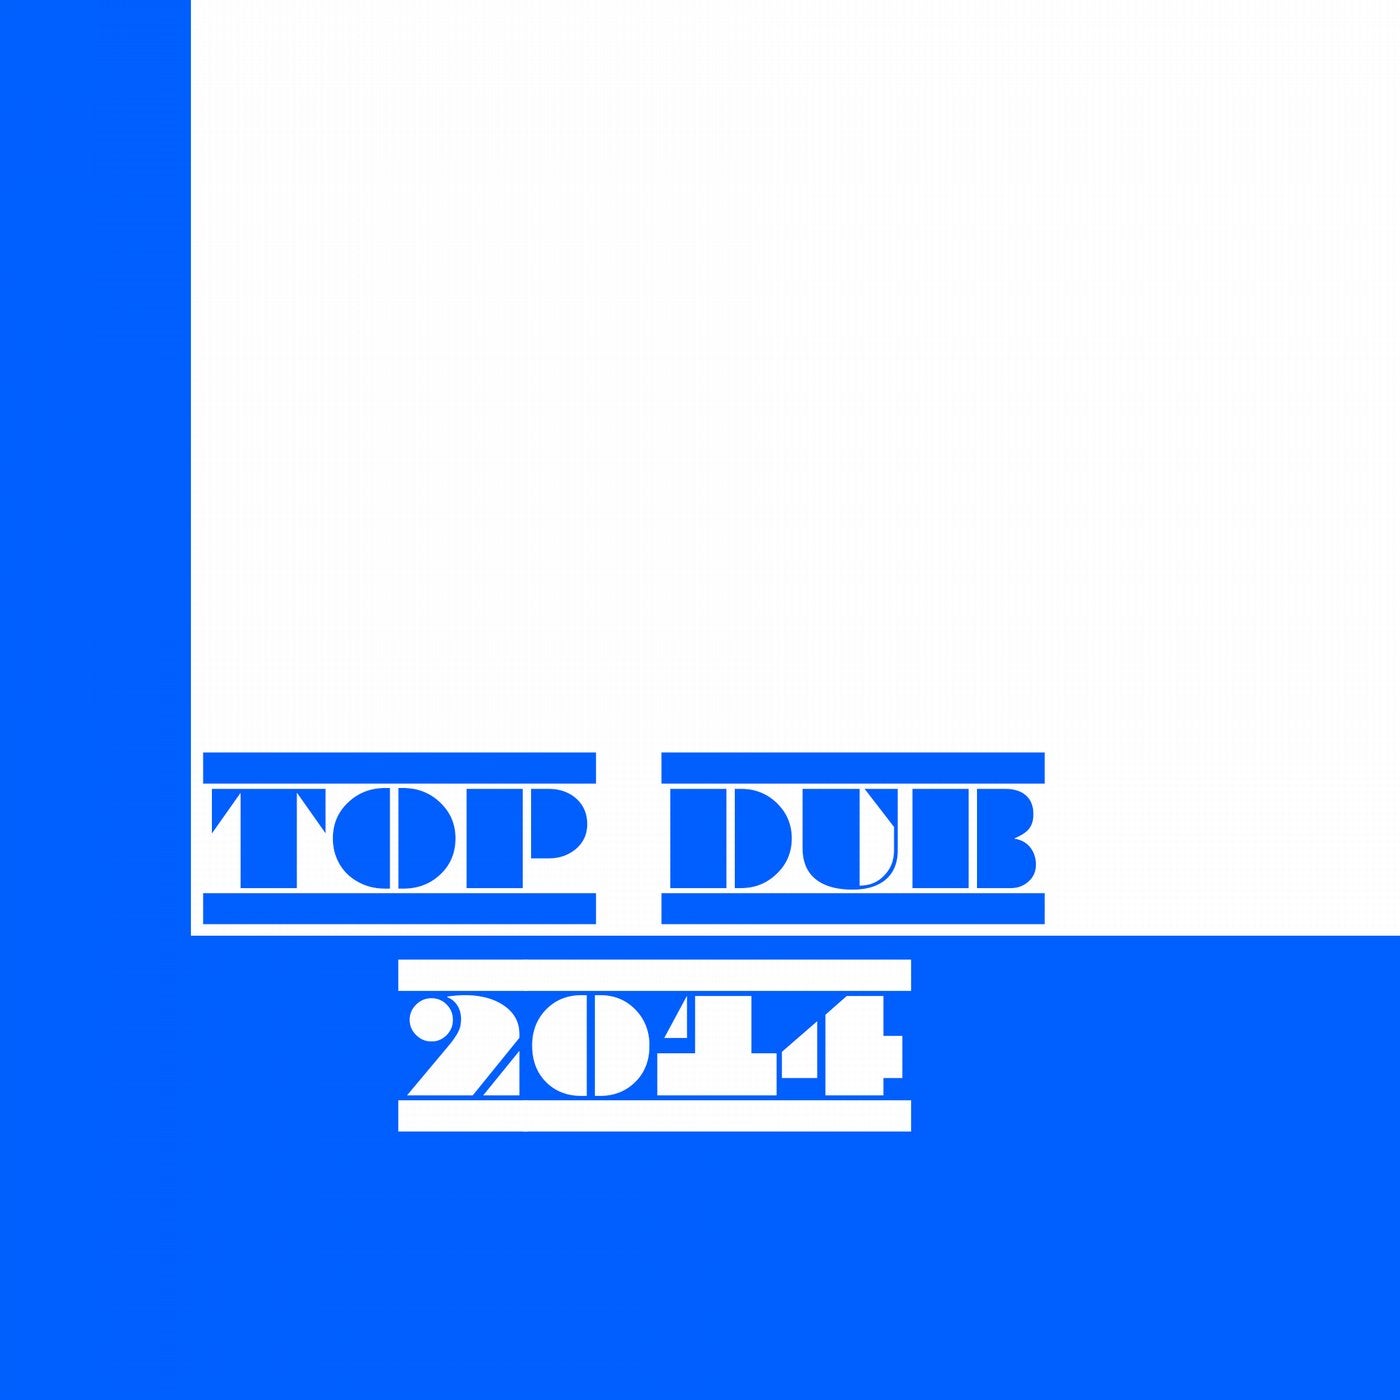 Top Dub 2014